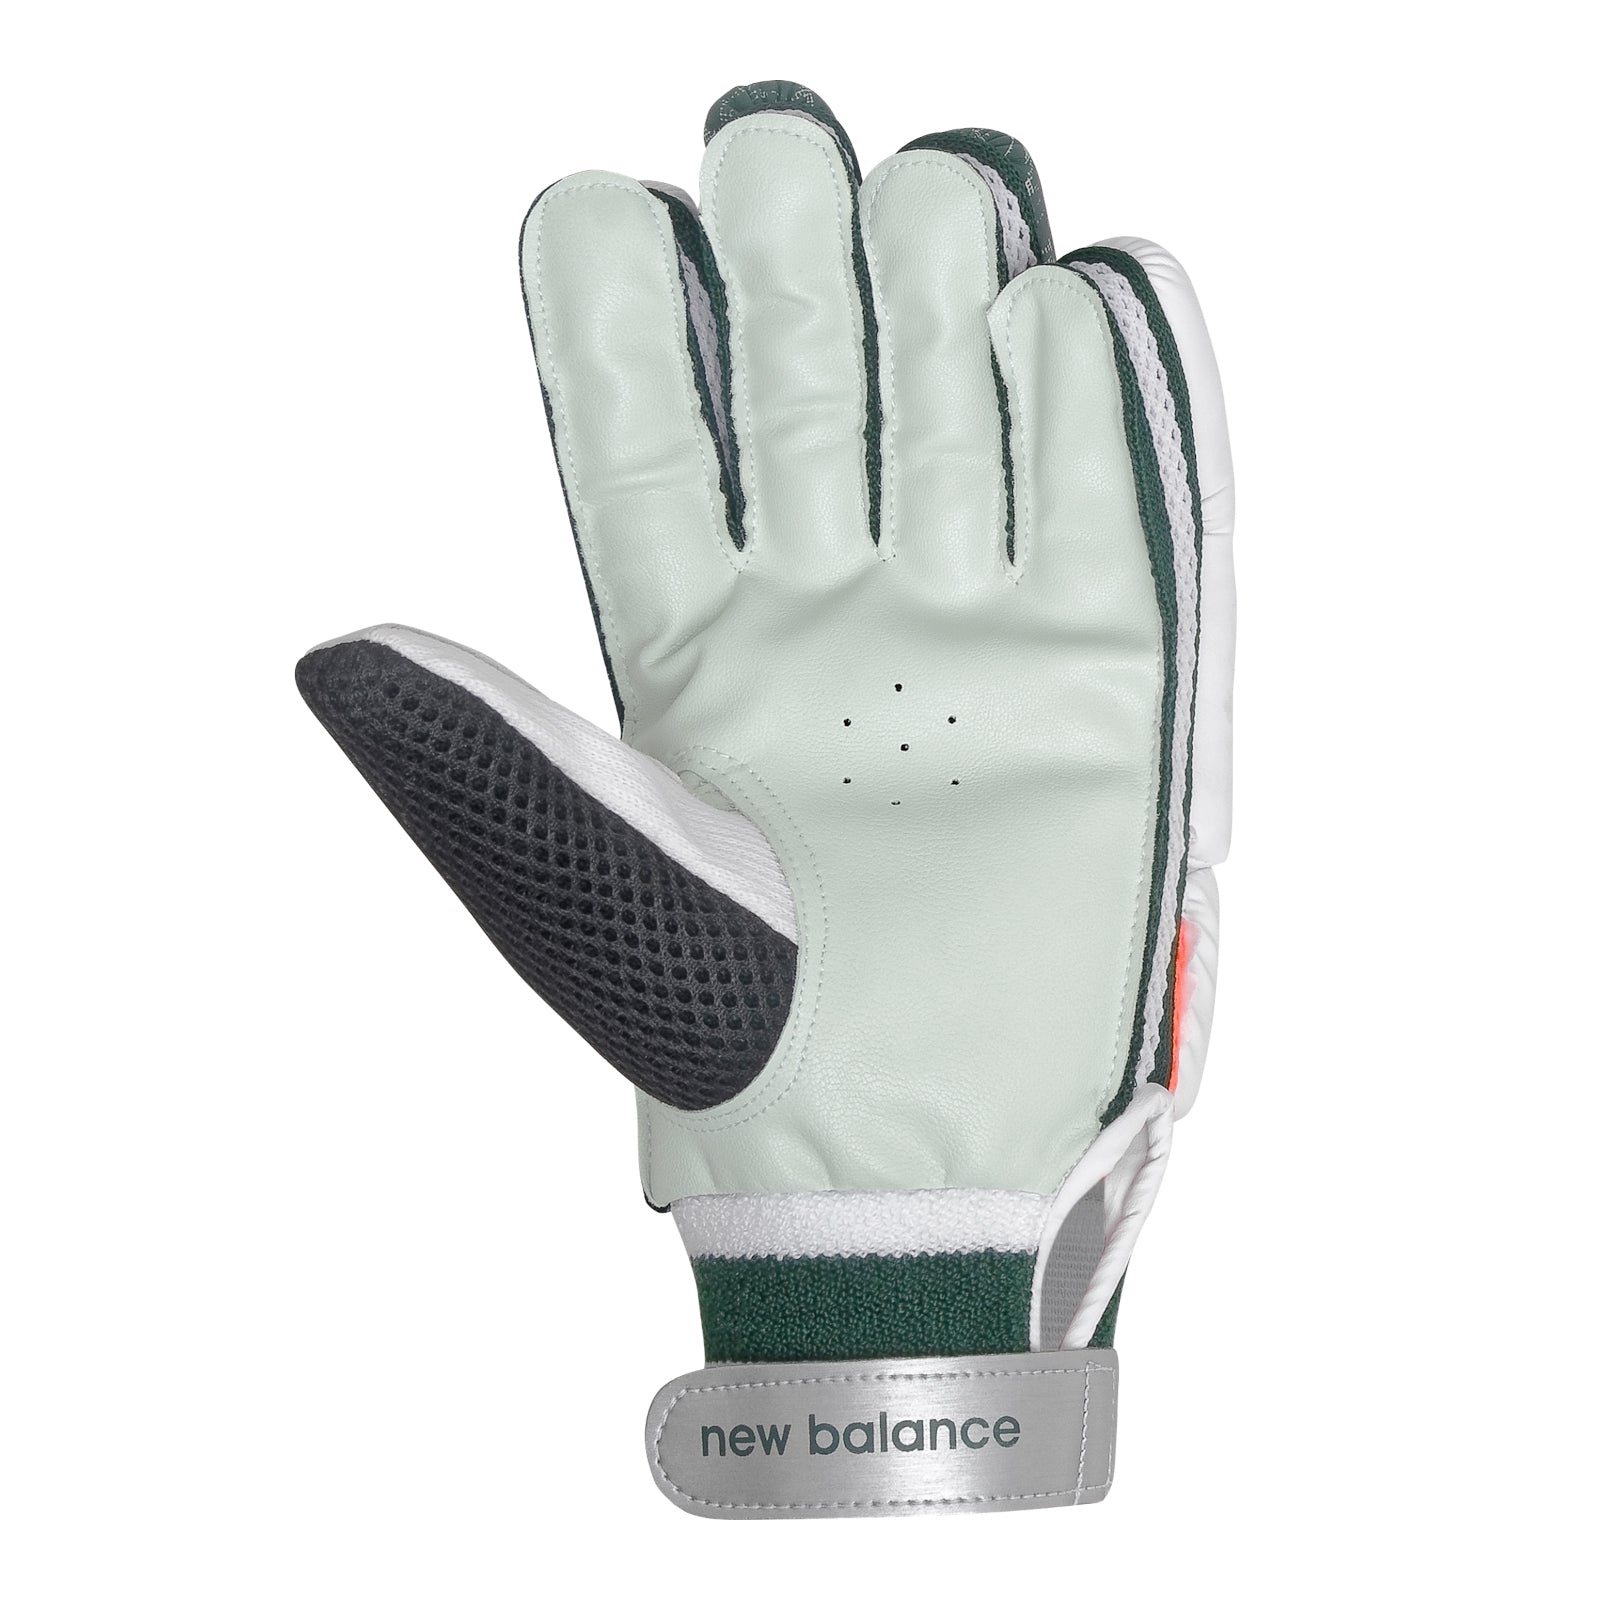 New Balance DC 380 Junior Cricket Batting Gloves